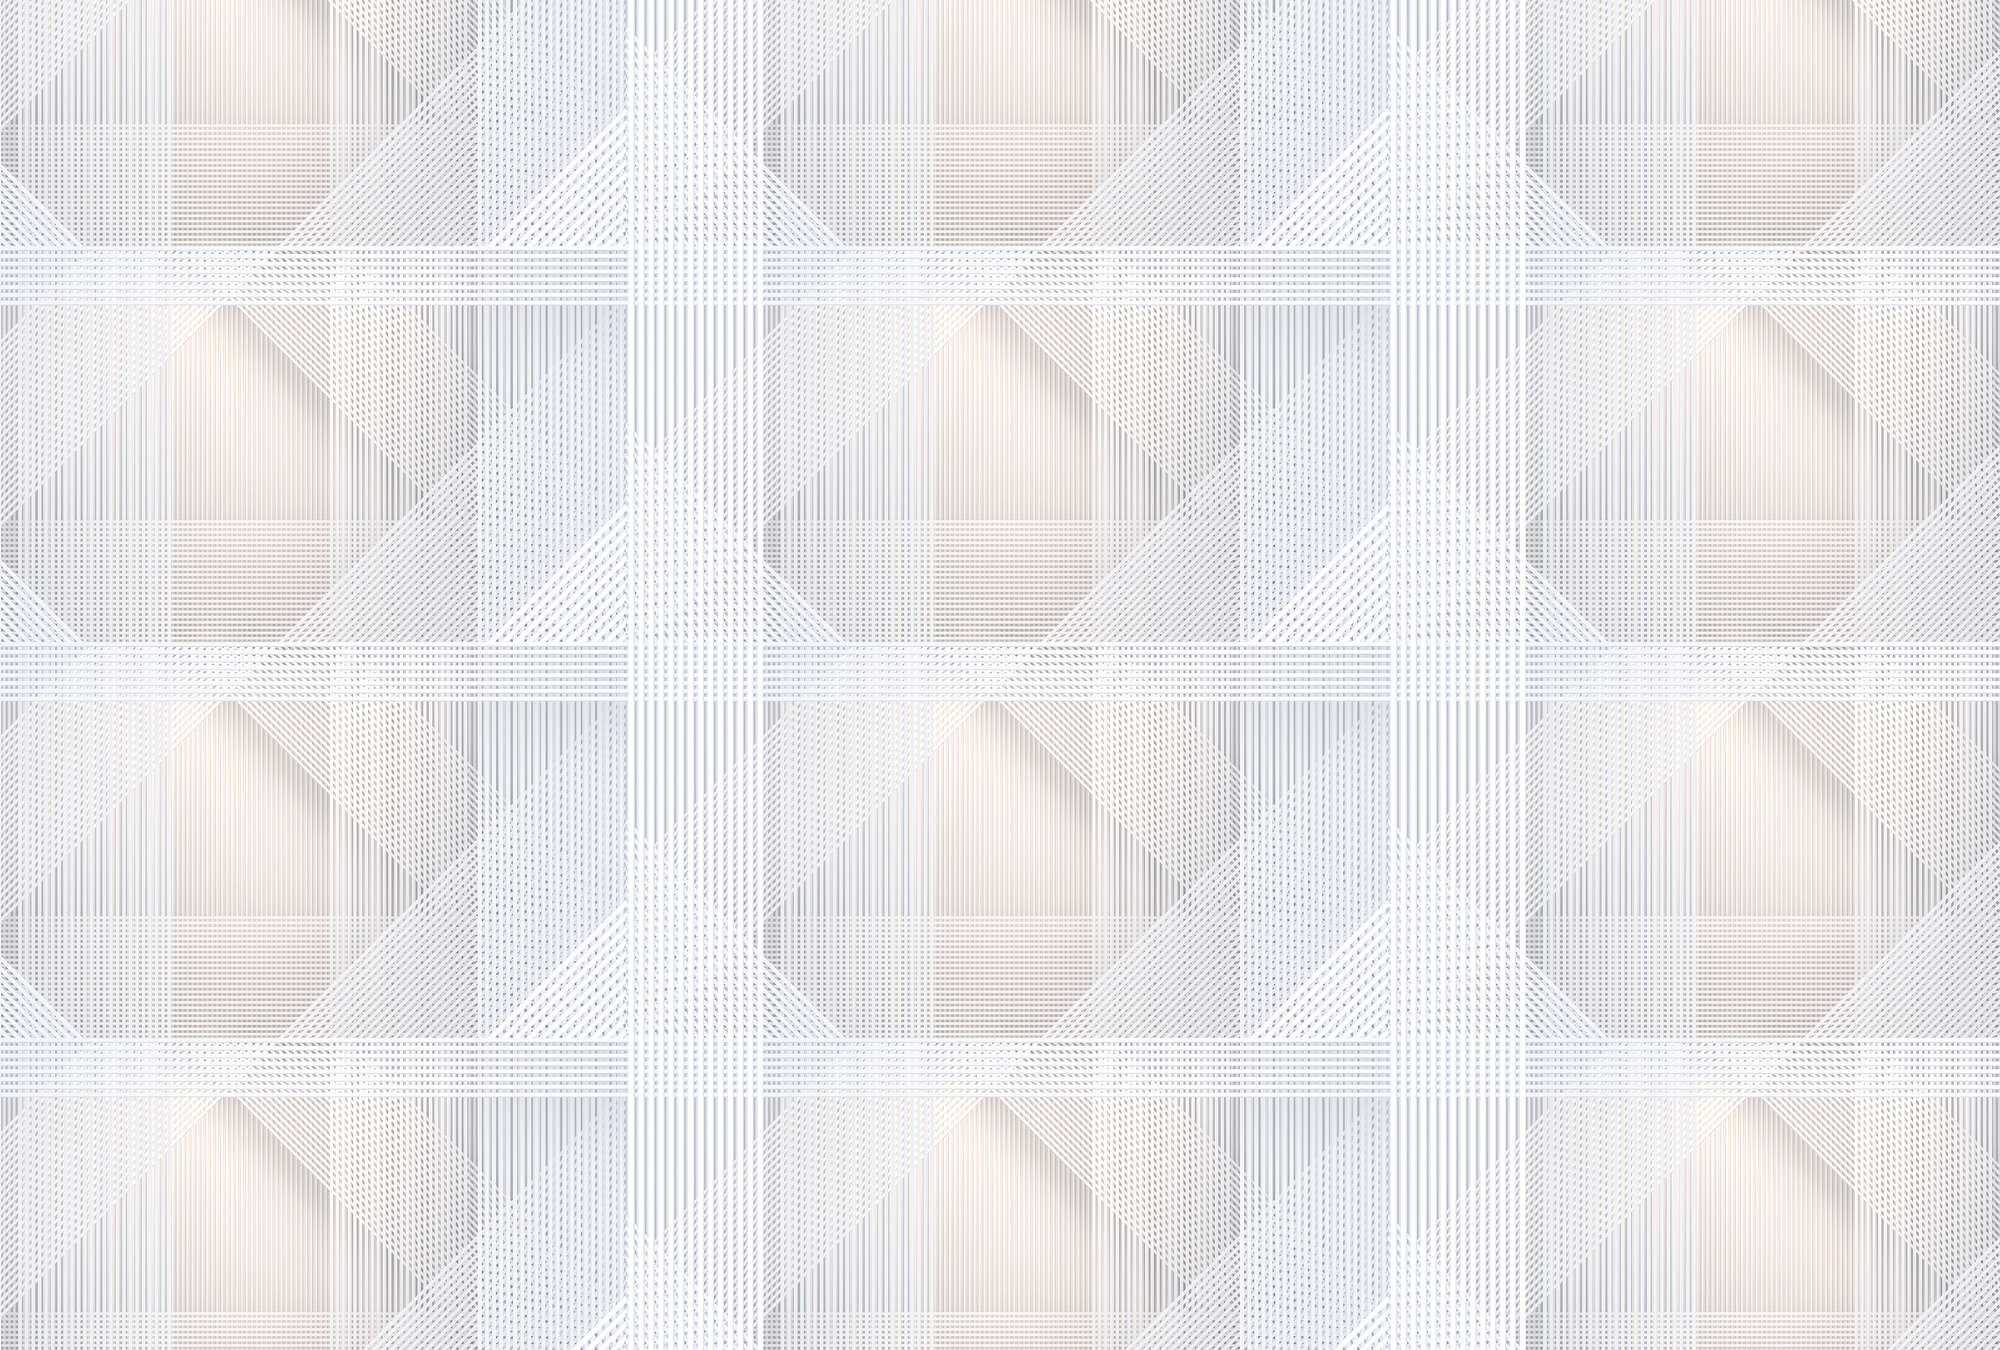             Strings 1 - Digital behang geometrisch streeppatroon - Grijs, Oranje | Premium glad fleece
        